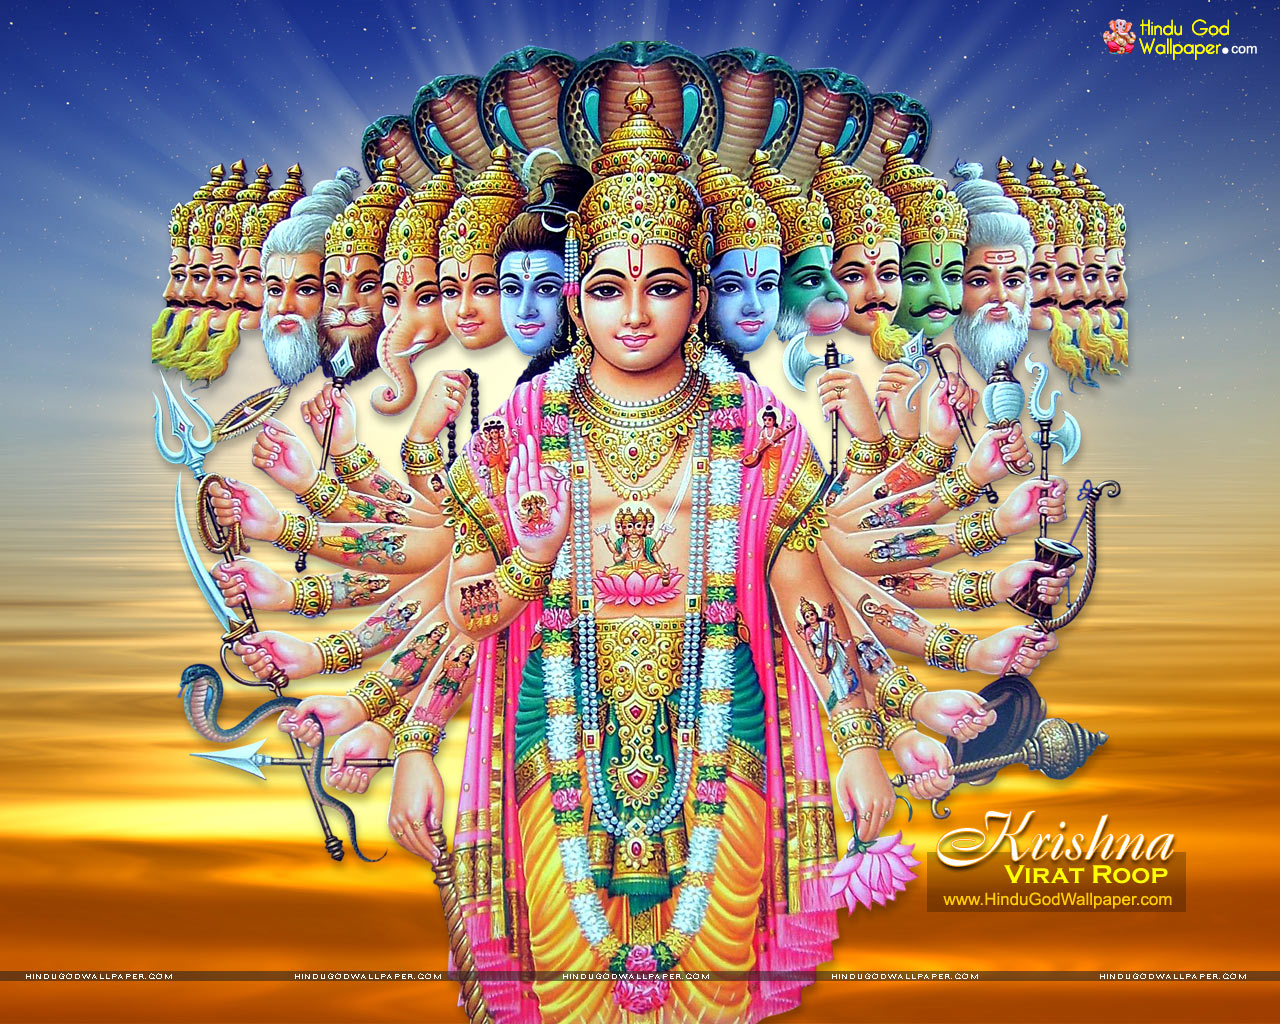 Lord Krishna Virat Roop Wallpapers Free Download